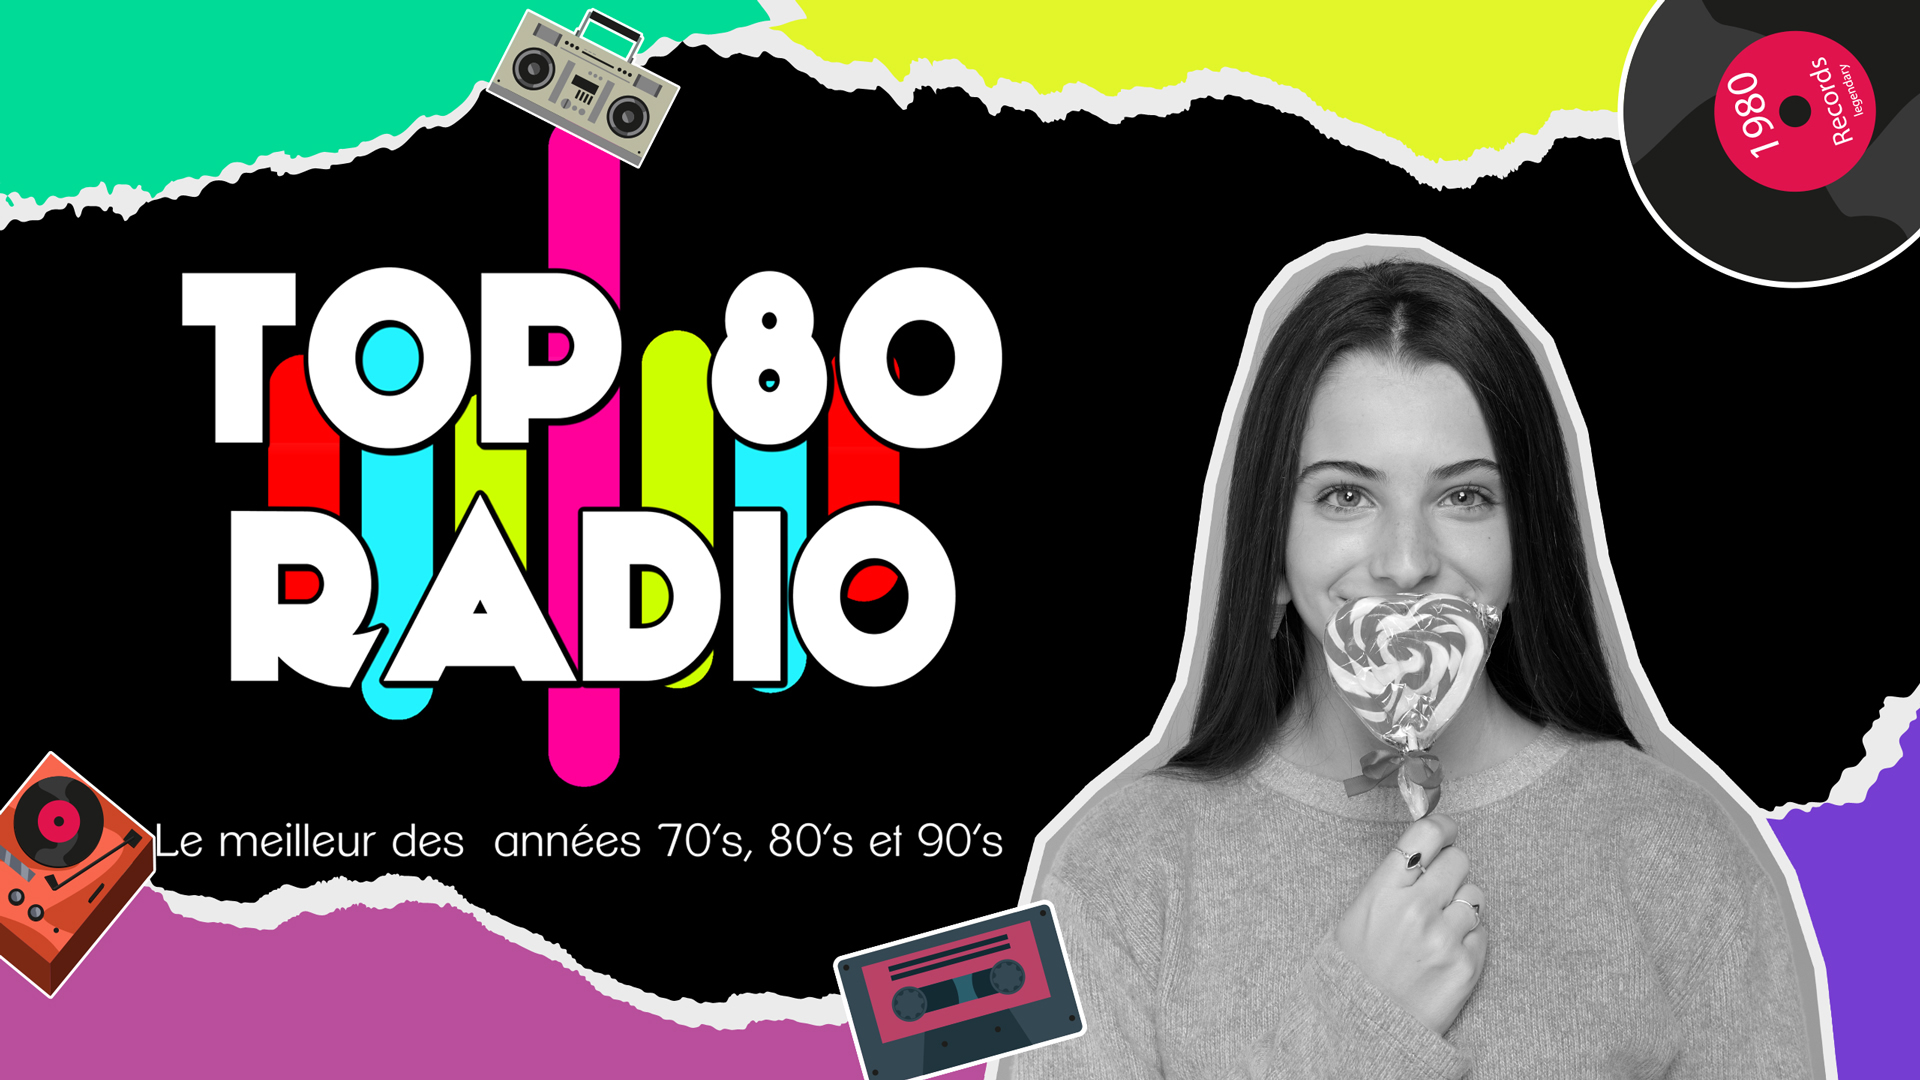 WALLPAPER–TOP-80-RADIO—44